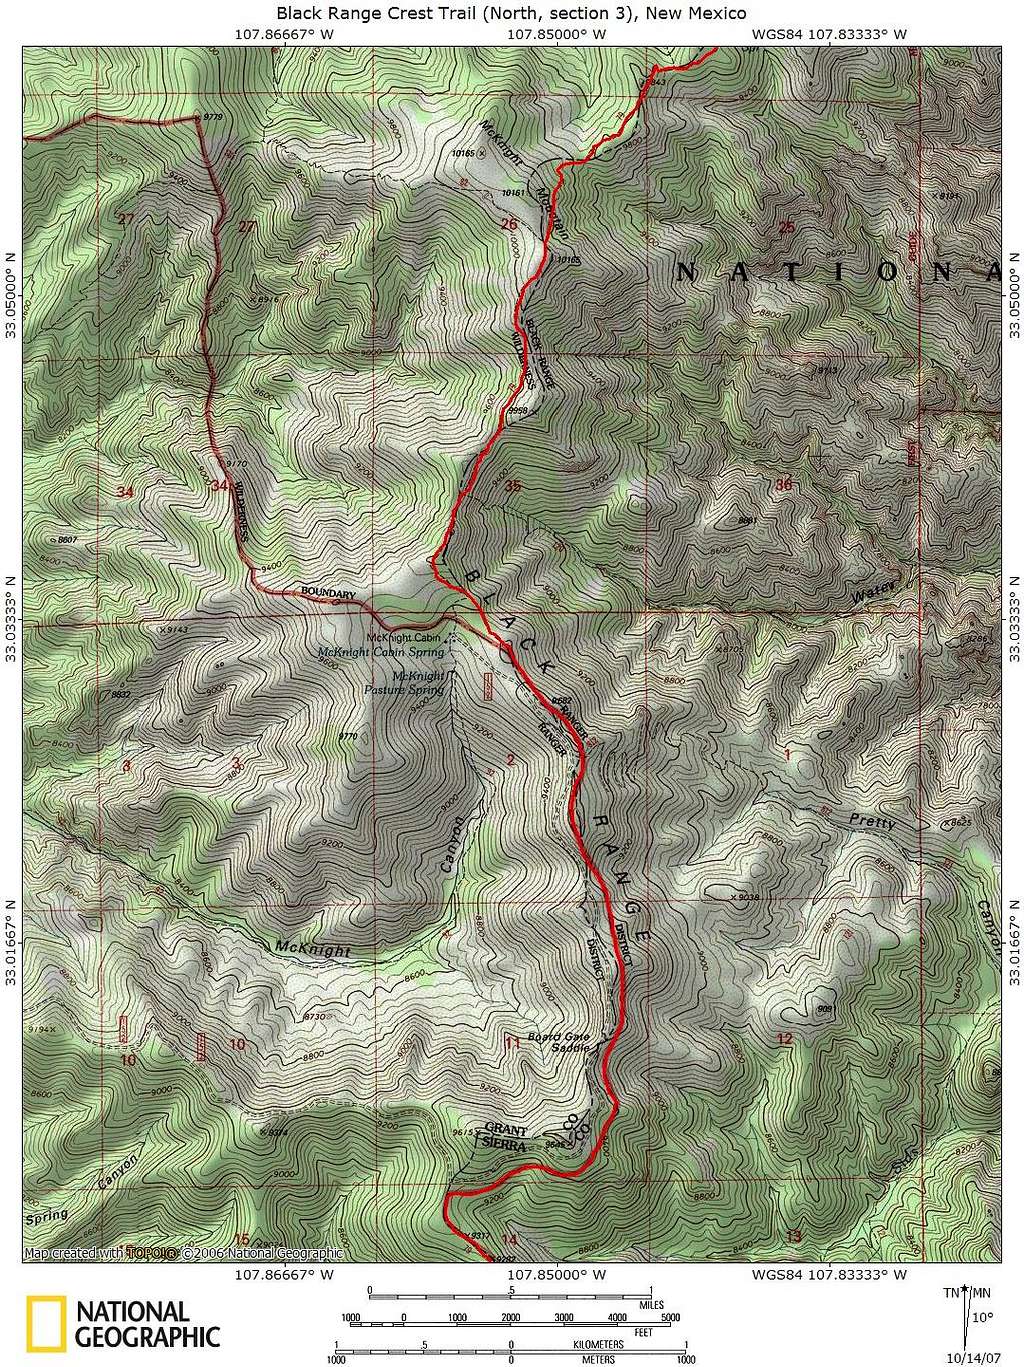 Black Range Crest Trail (North, section 3)